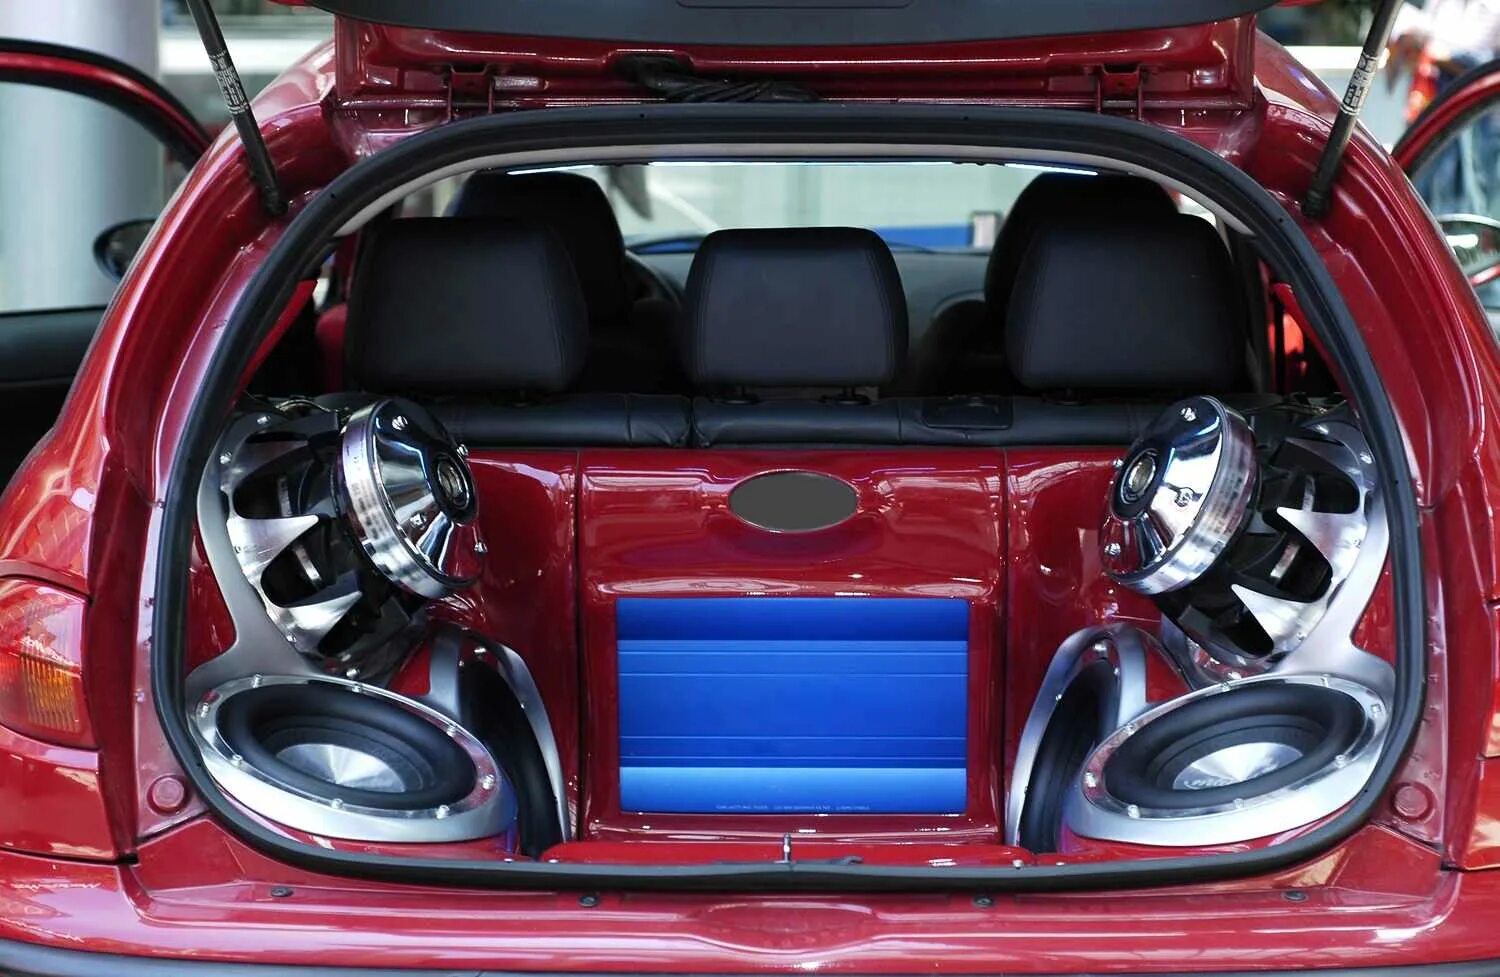 Many bass. Car Audio System 60wx4. Car Audio в Bentley Continental gt 2008 Speakers. Автозвук Пежо 206. Сабвуфер Пежо 206 кабриолет.